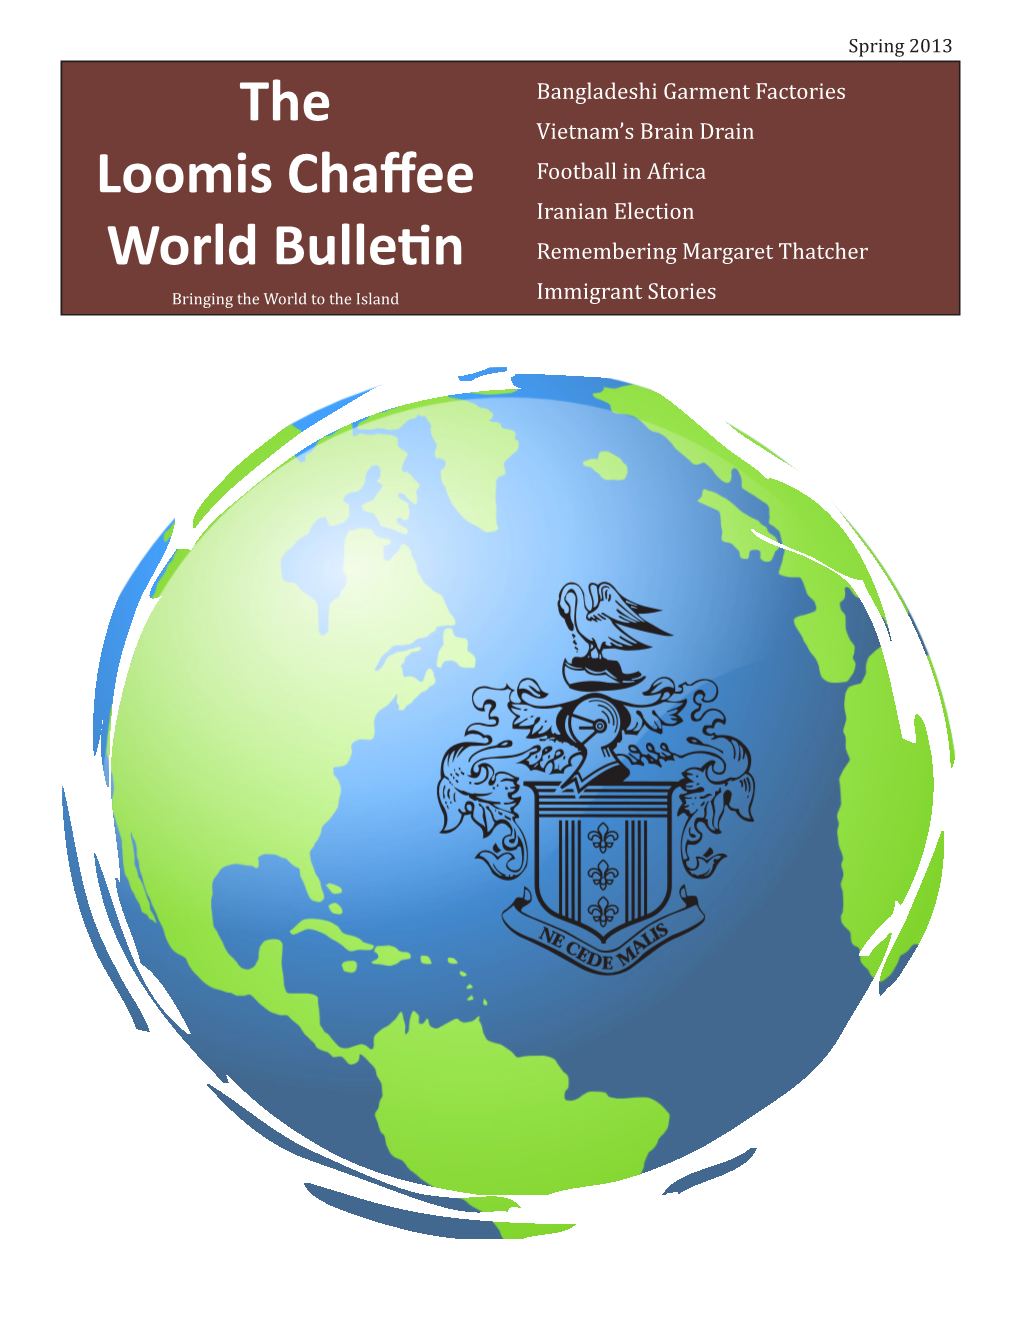 The Loomis Chaffee World Bulletin